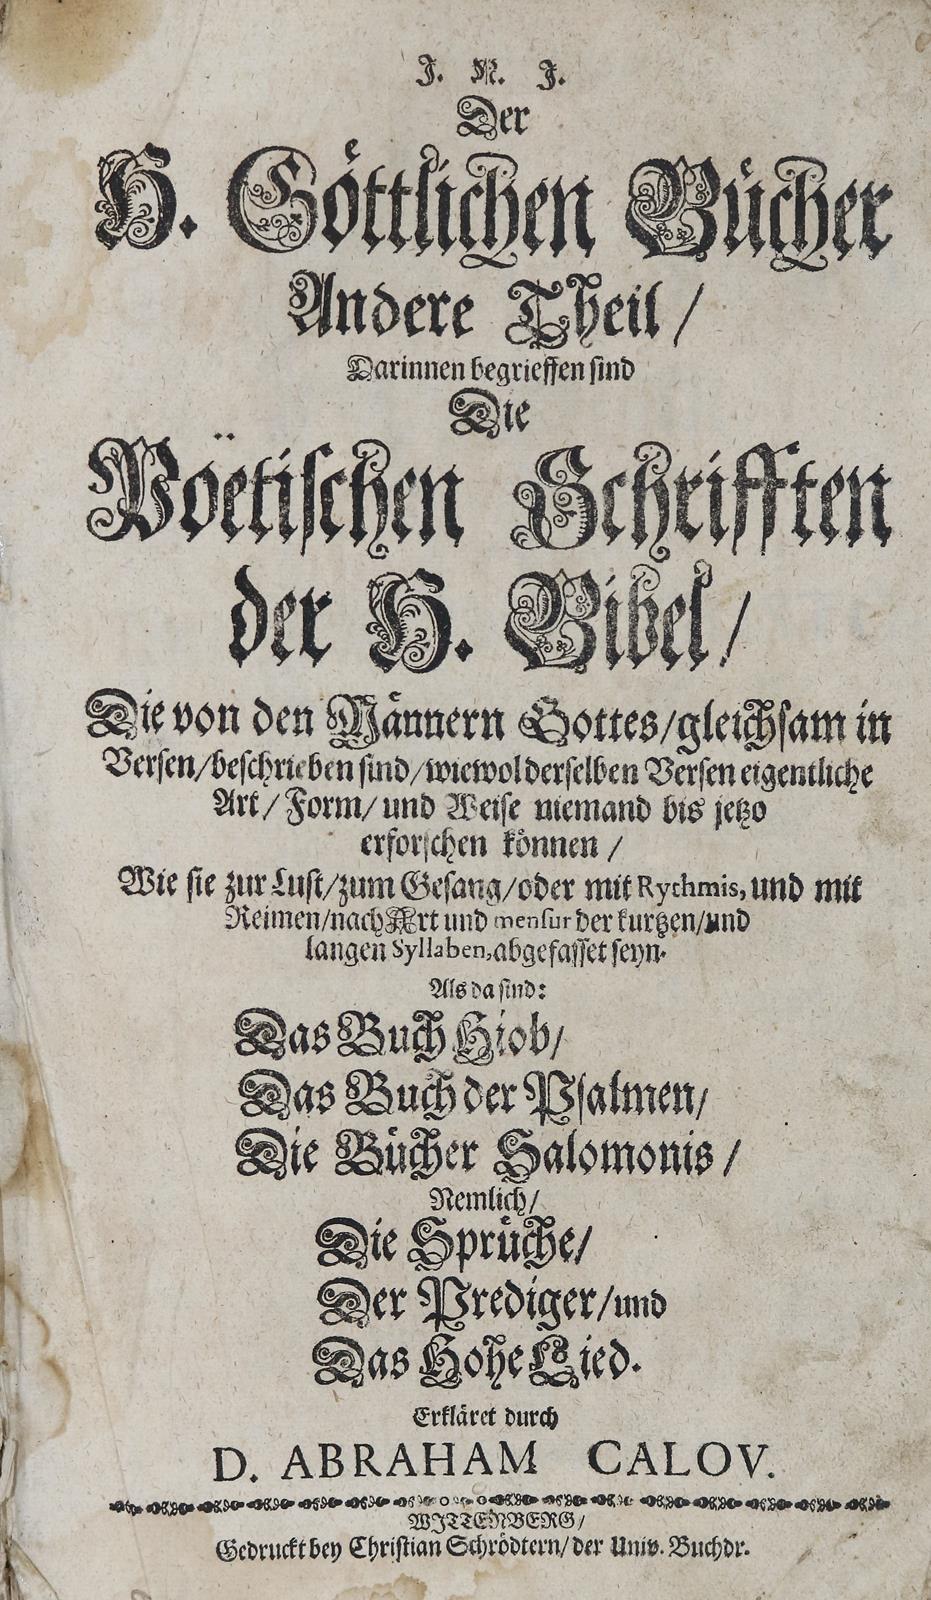 Biblia germanica. - Image 2 of 2